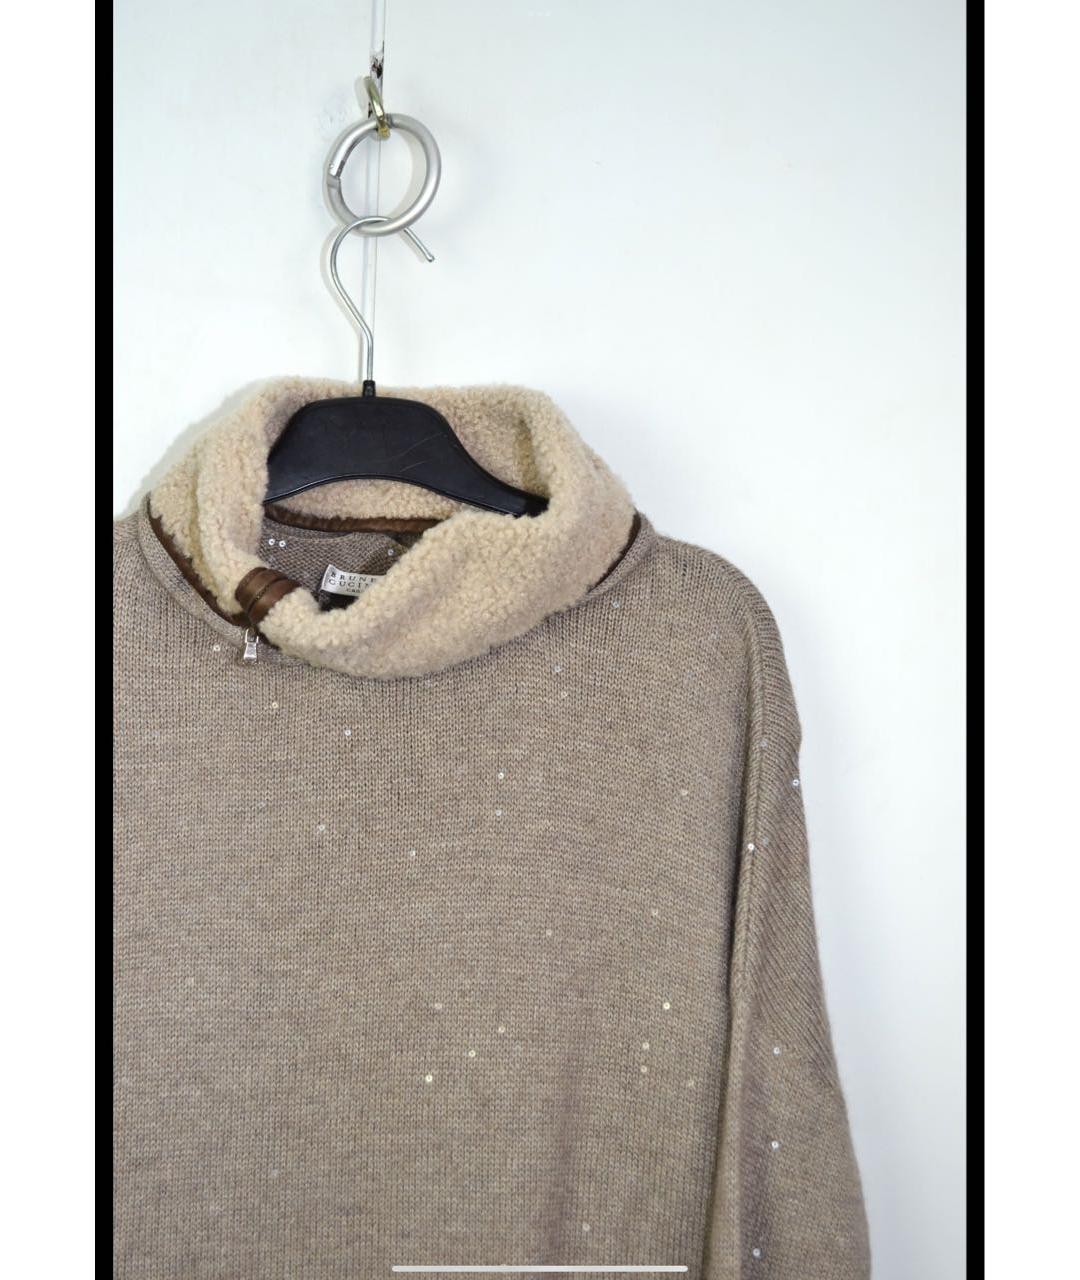 BRUNELLO CUCINELLI Бежевый кашемировый джемпер / свитер, фото 3